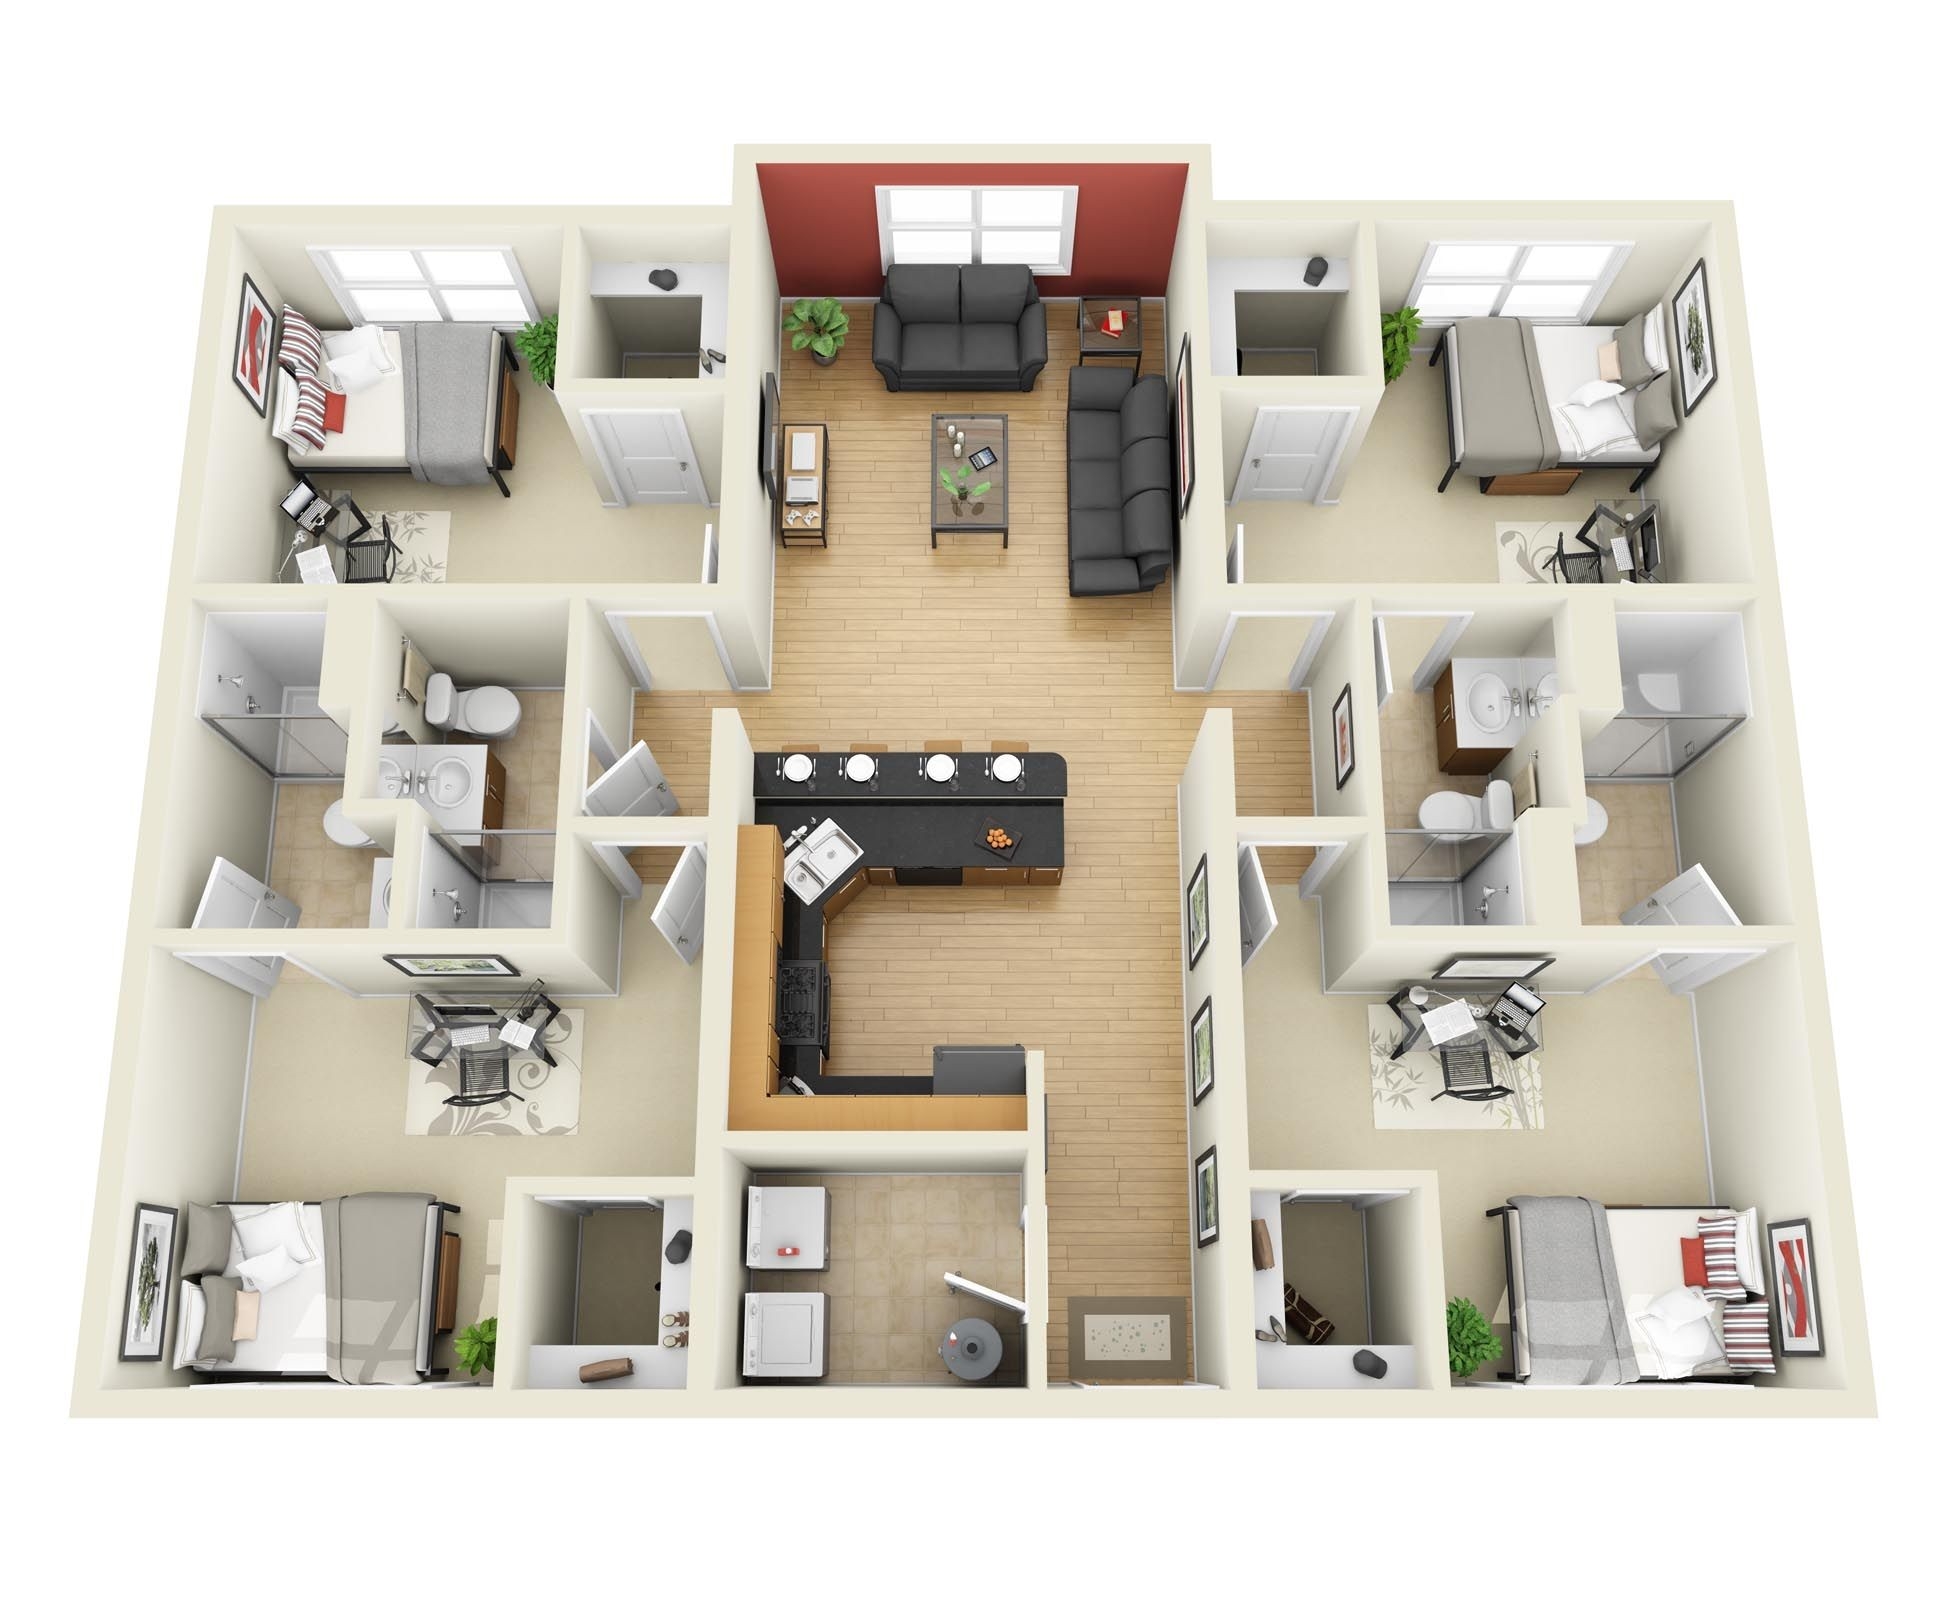 3 bedroom apartments sacramento 50 four 4 bedroom apartment house